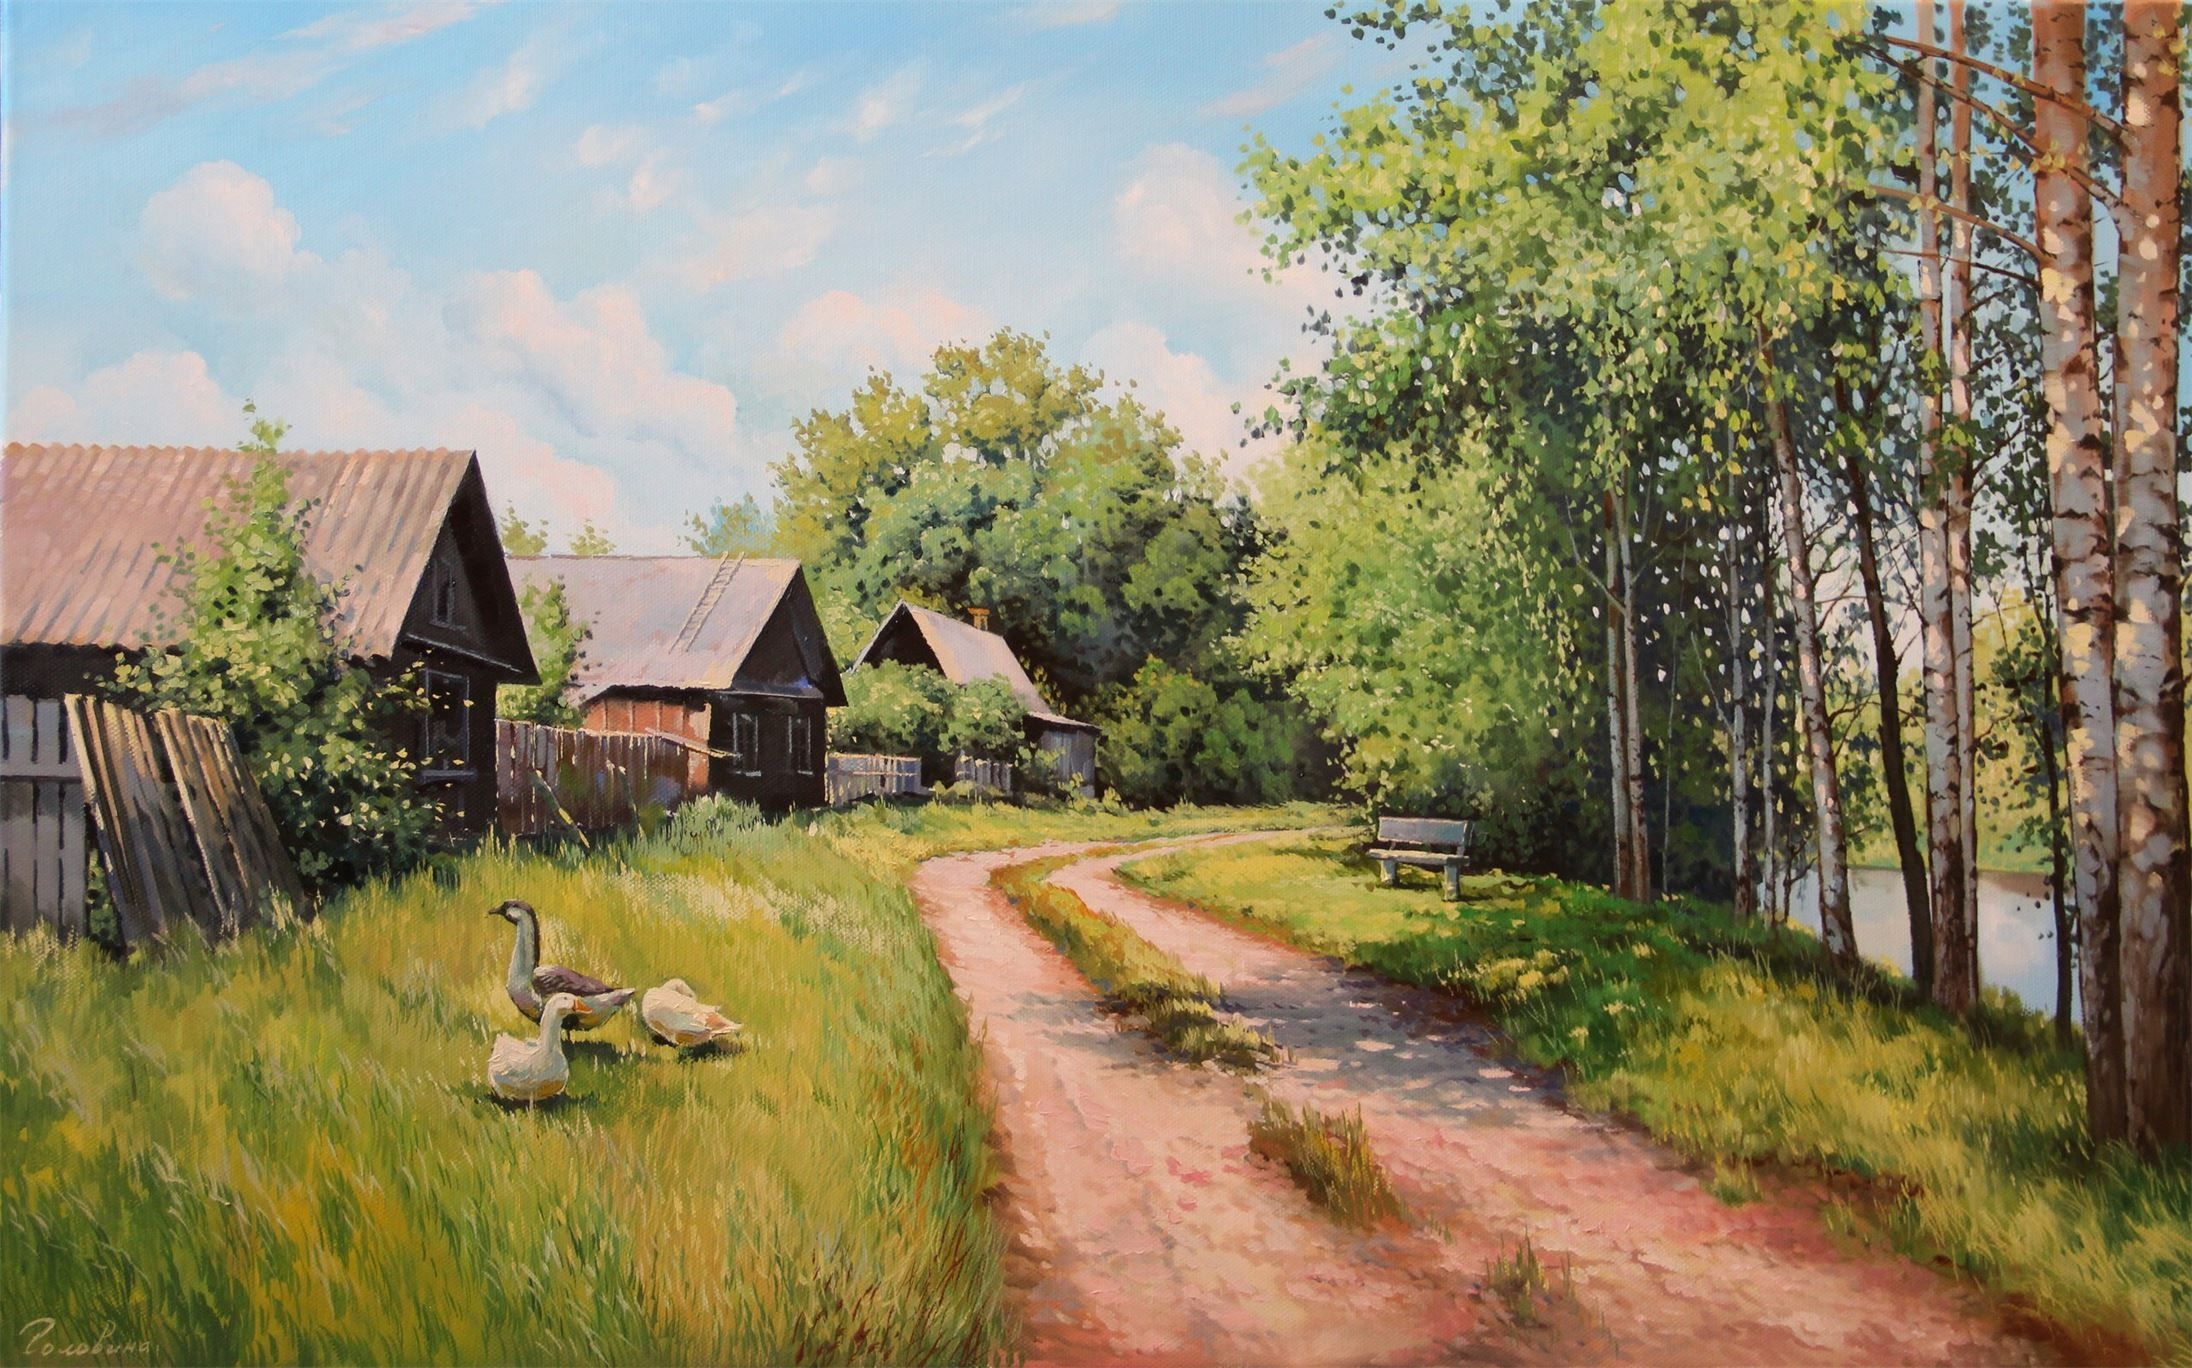 Я за деревню побегу. Картина Вячеслава Таранова родная деревня. Лукас деревенский пейзаж.